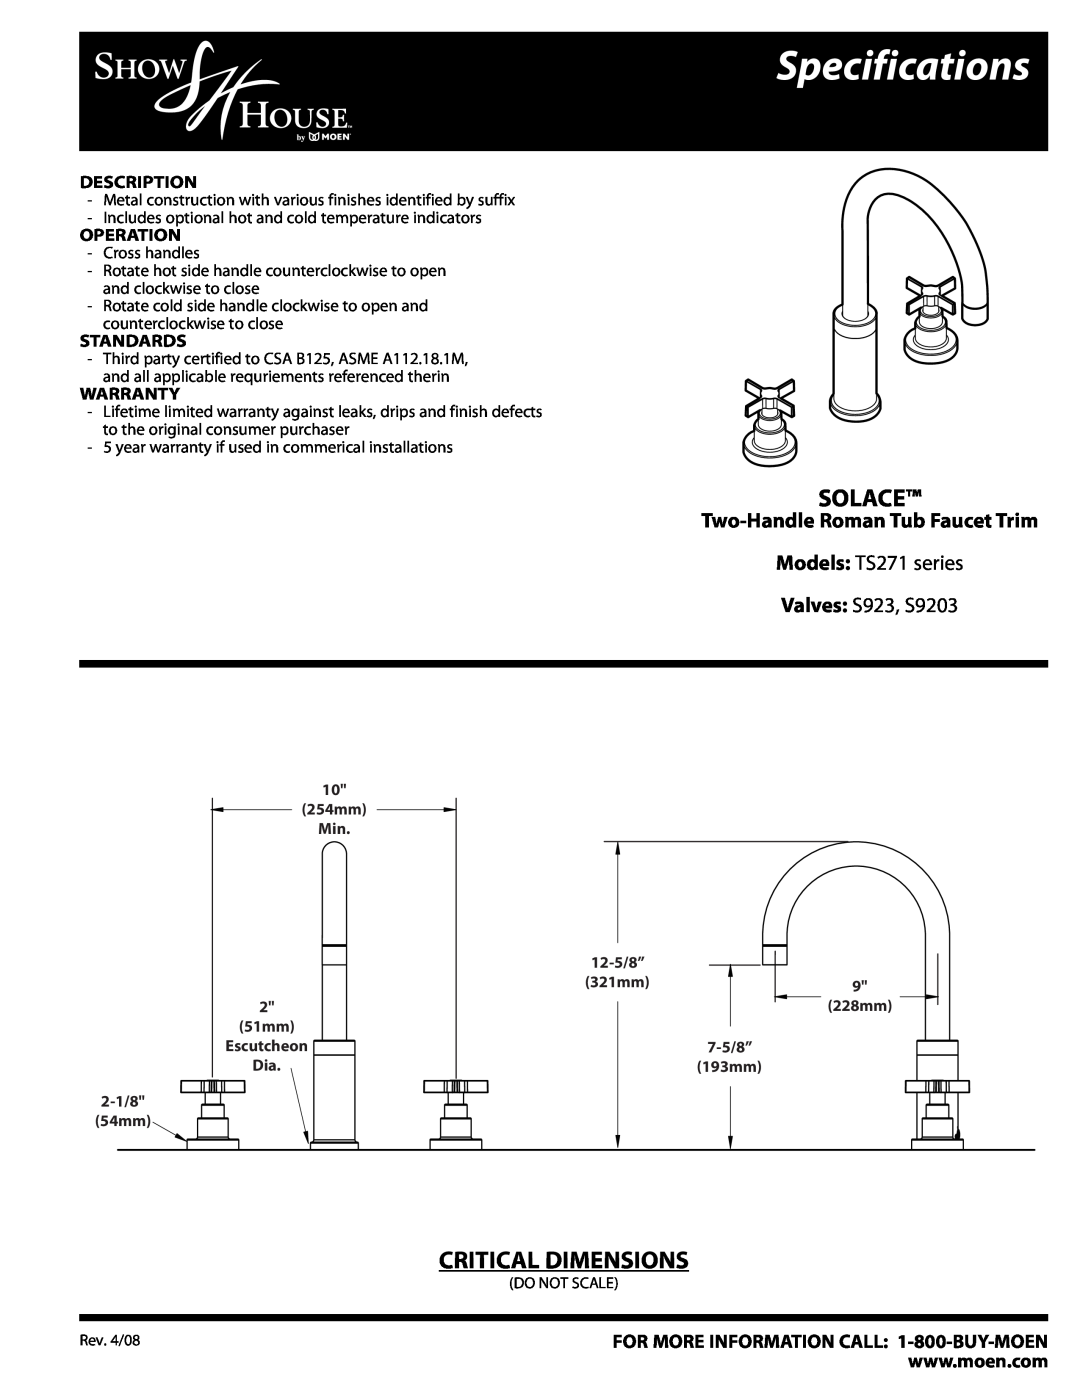 Moen TS271 specifications Specifications, Solace, Critical Dimensions, Two-Handle Roman Tub Faucet Trim, Description 